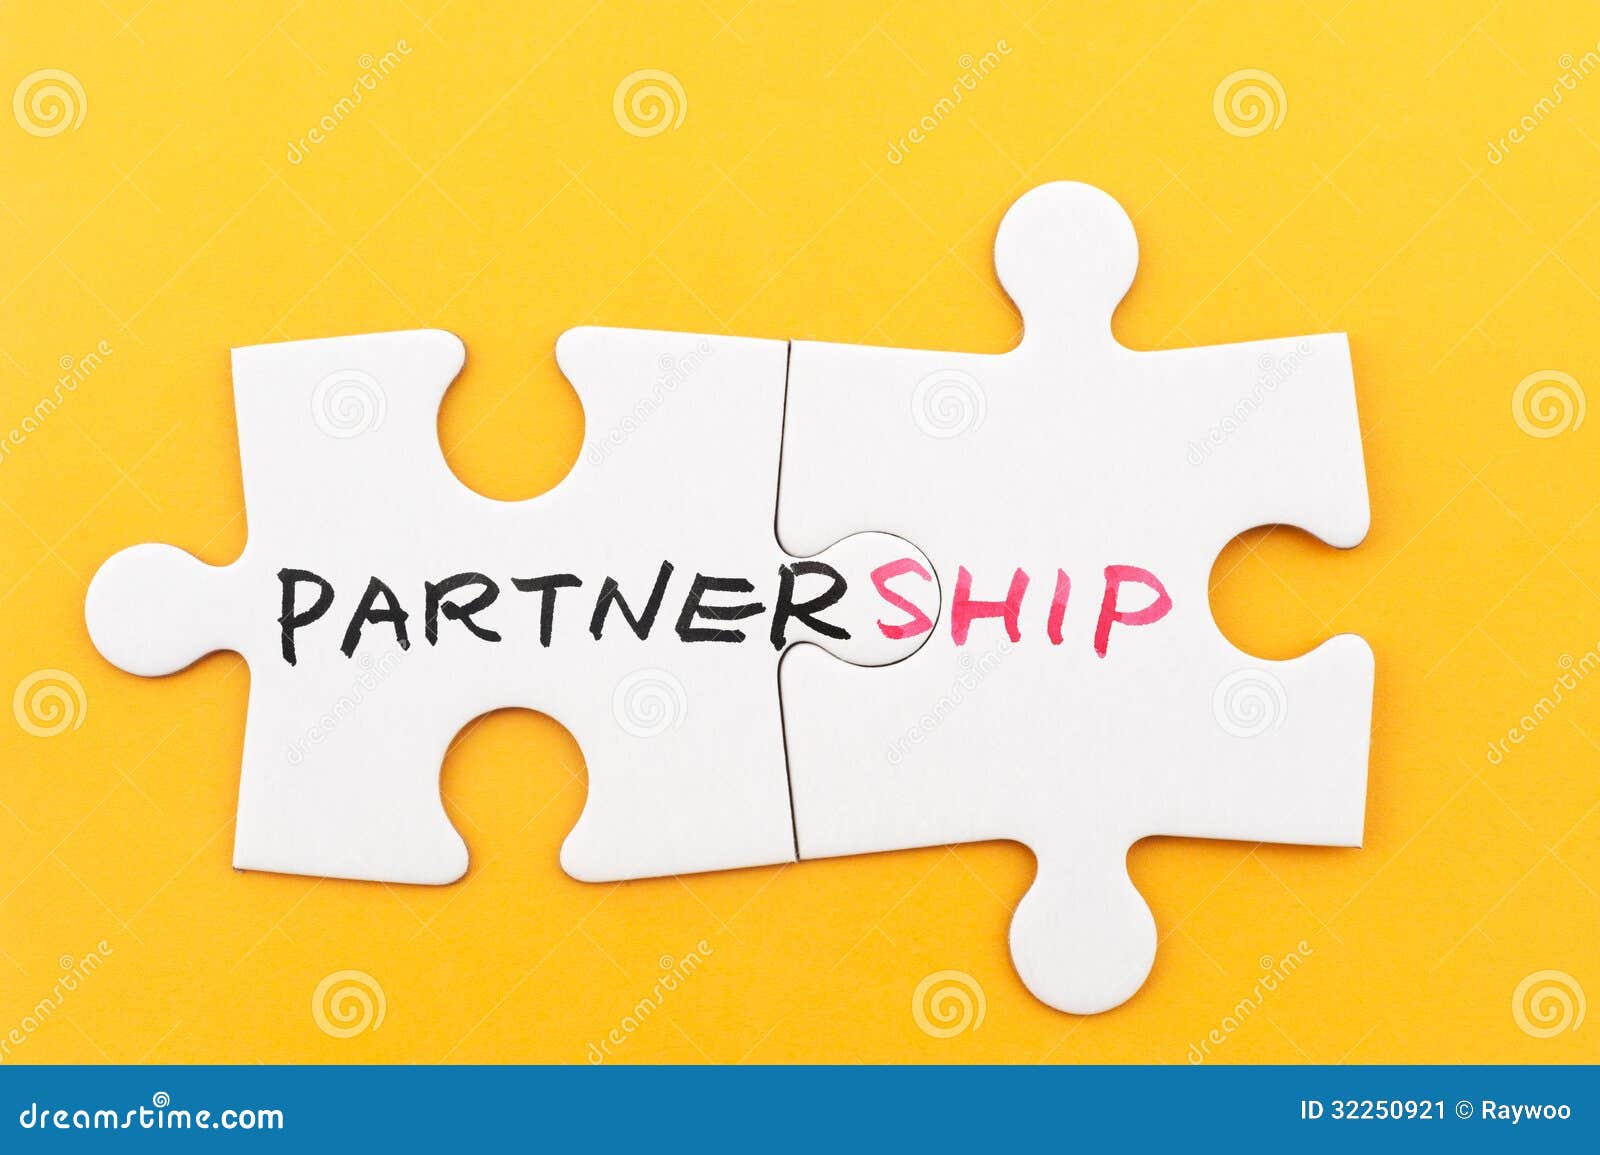 partnership concept